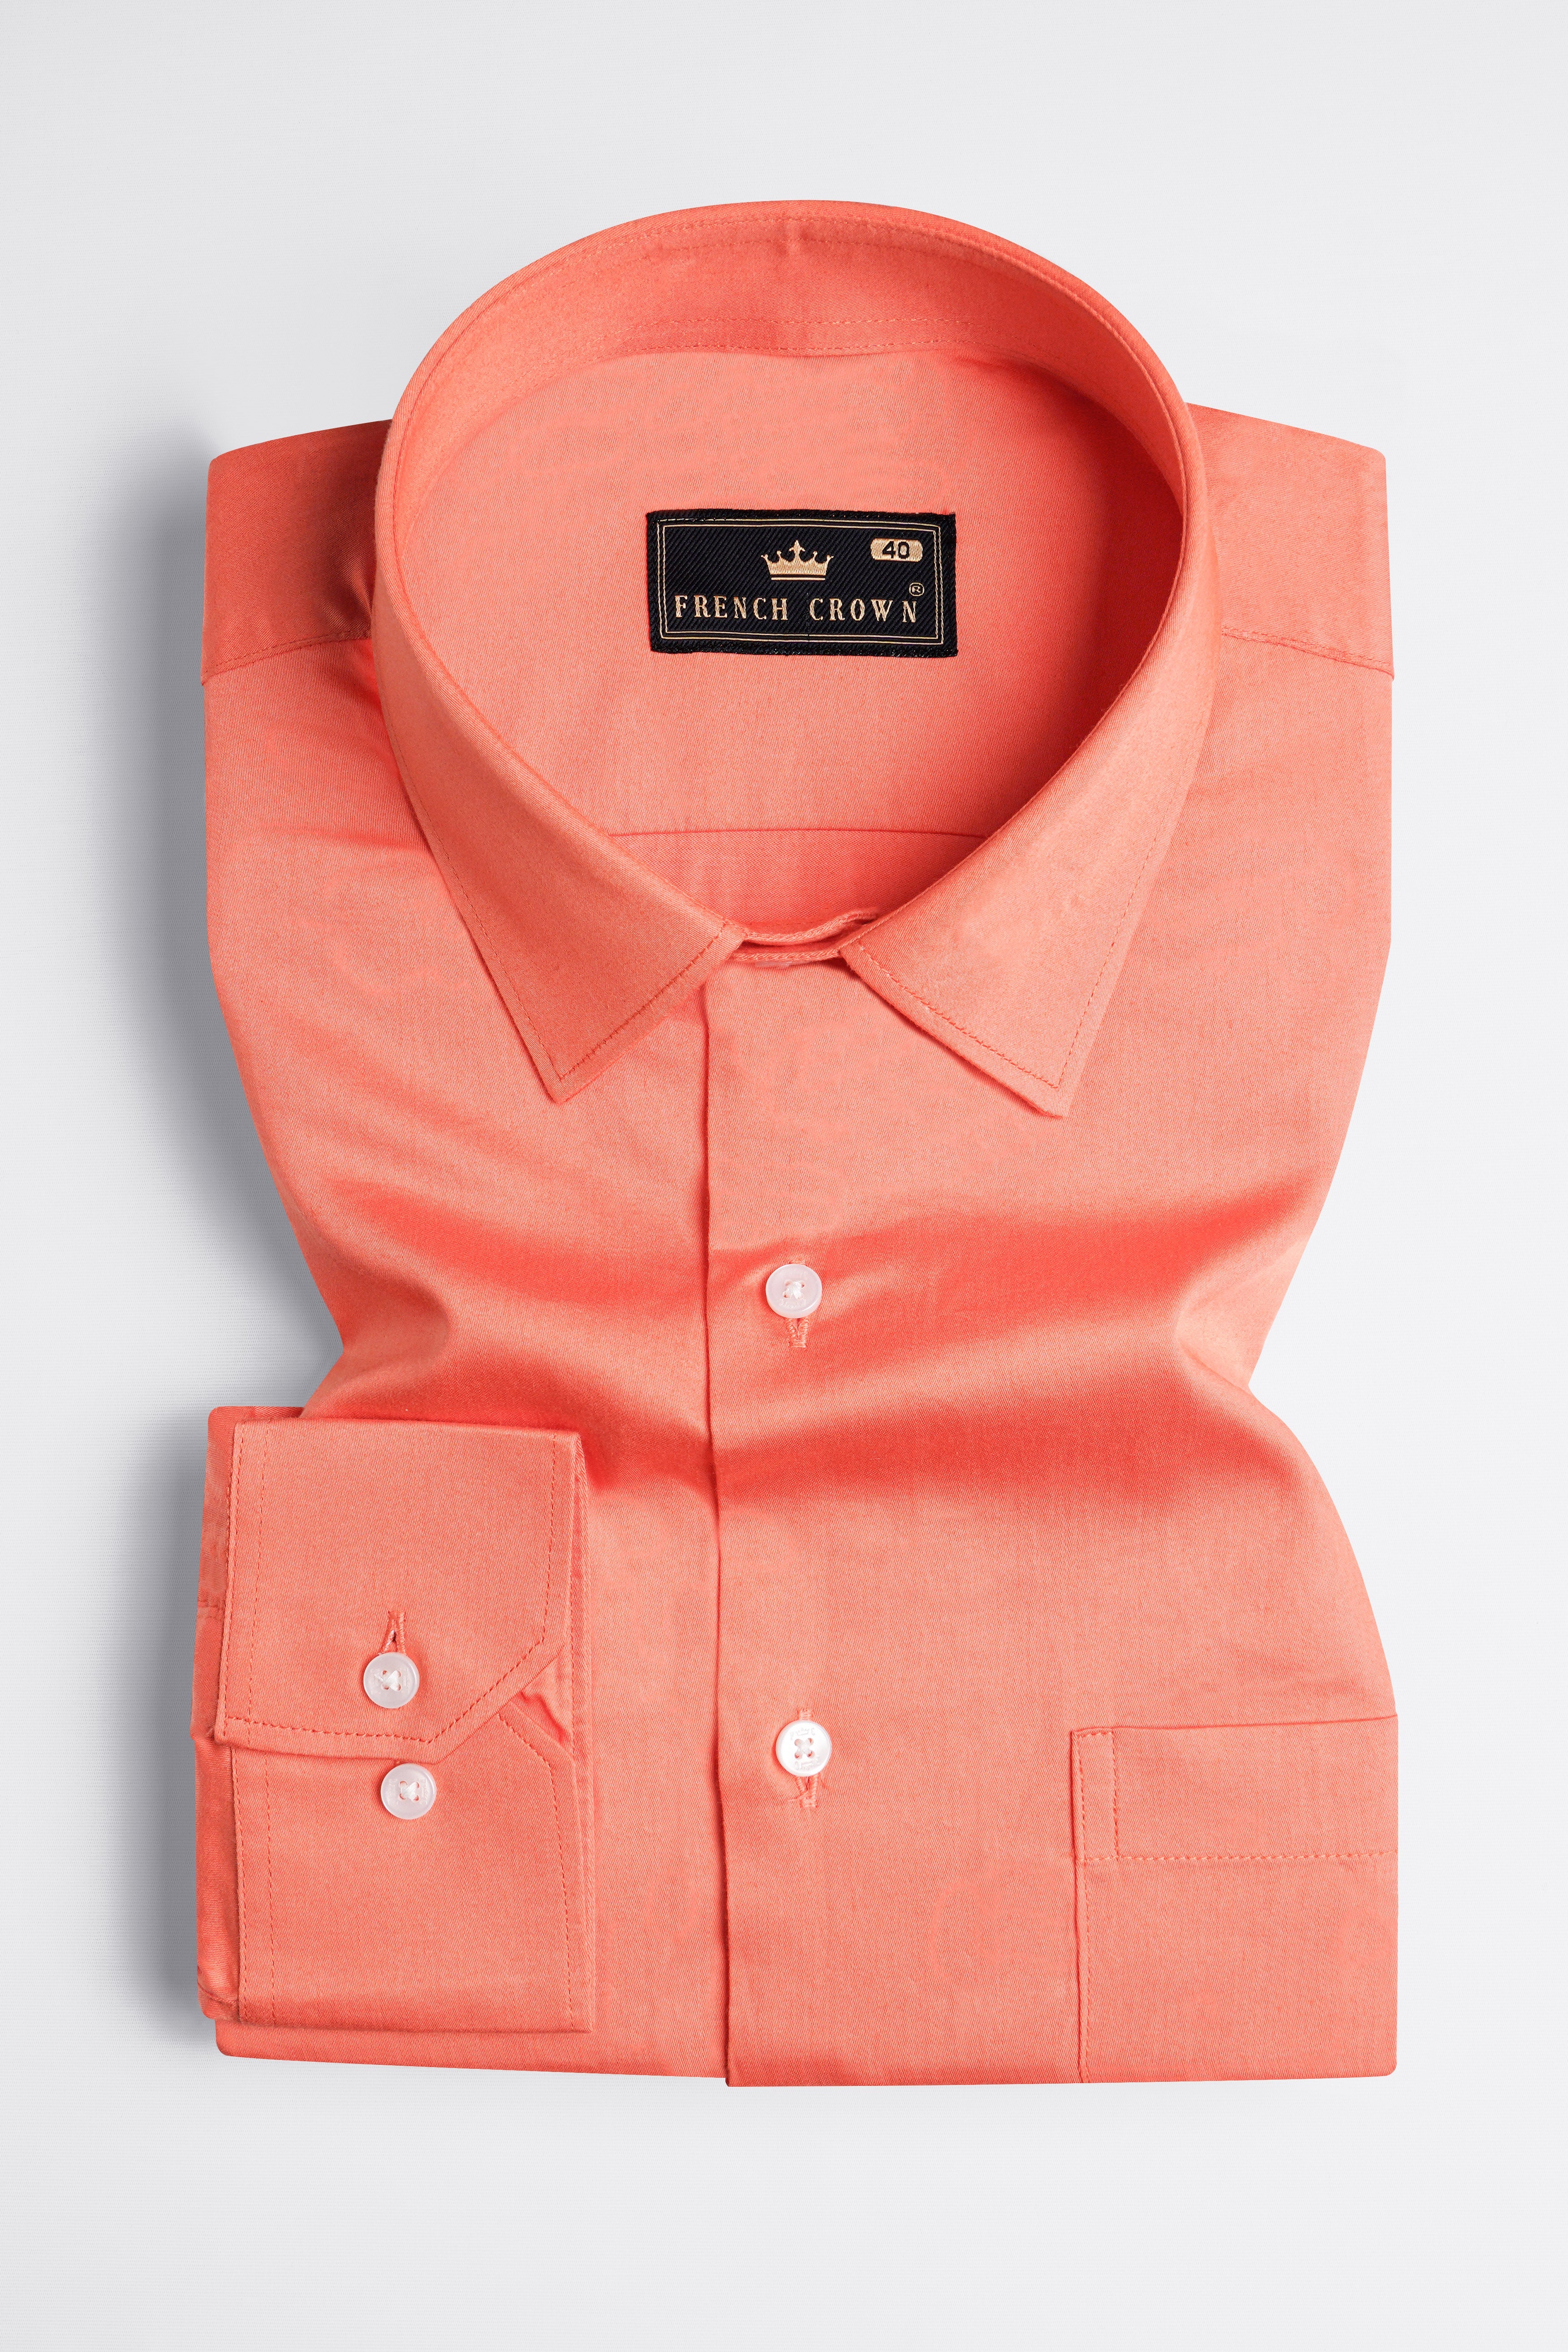 Vivid Tangerine Orange Twill Premium Cotton Shirt